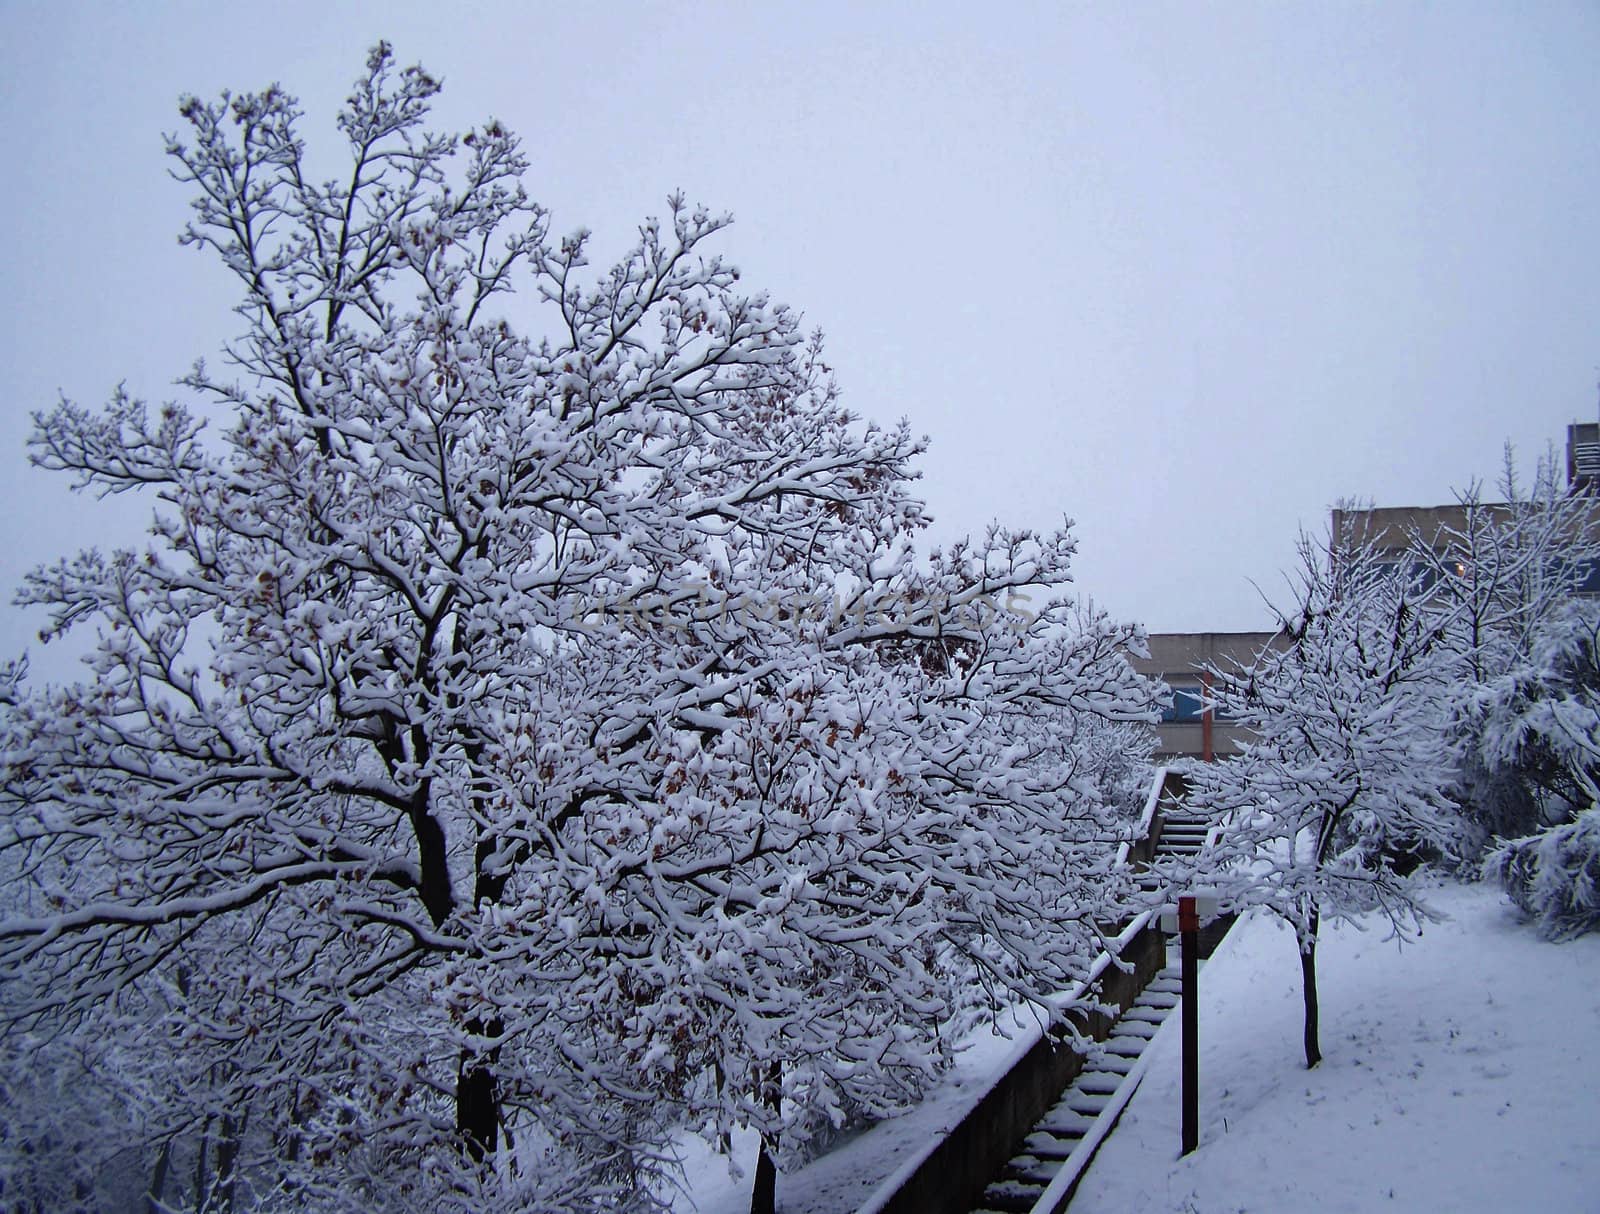 tree and snow in Urbino, Italy